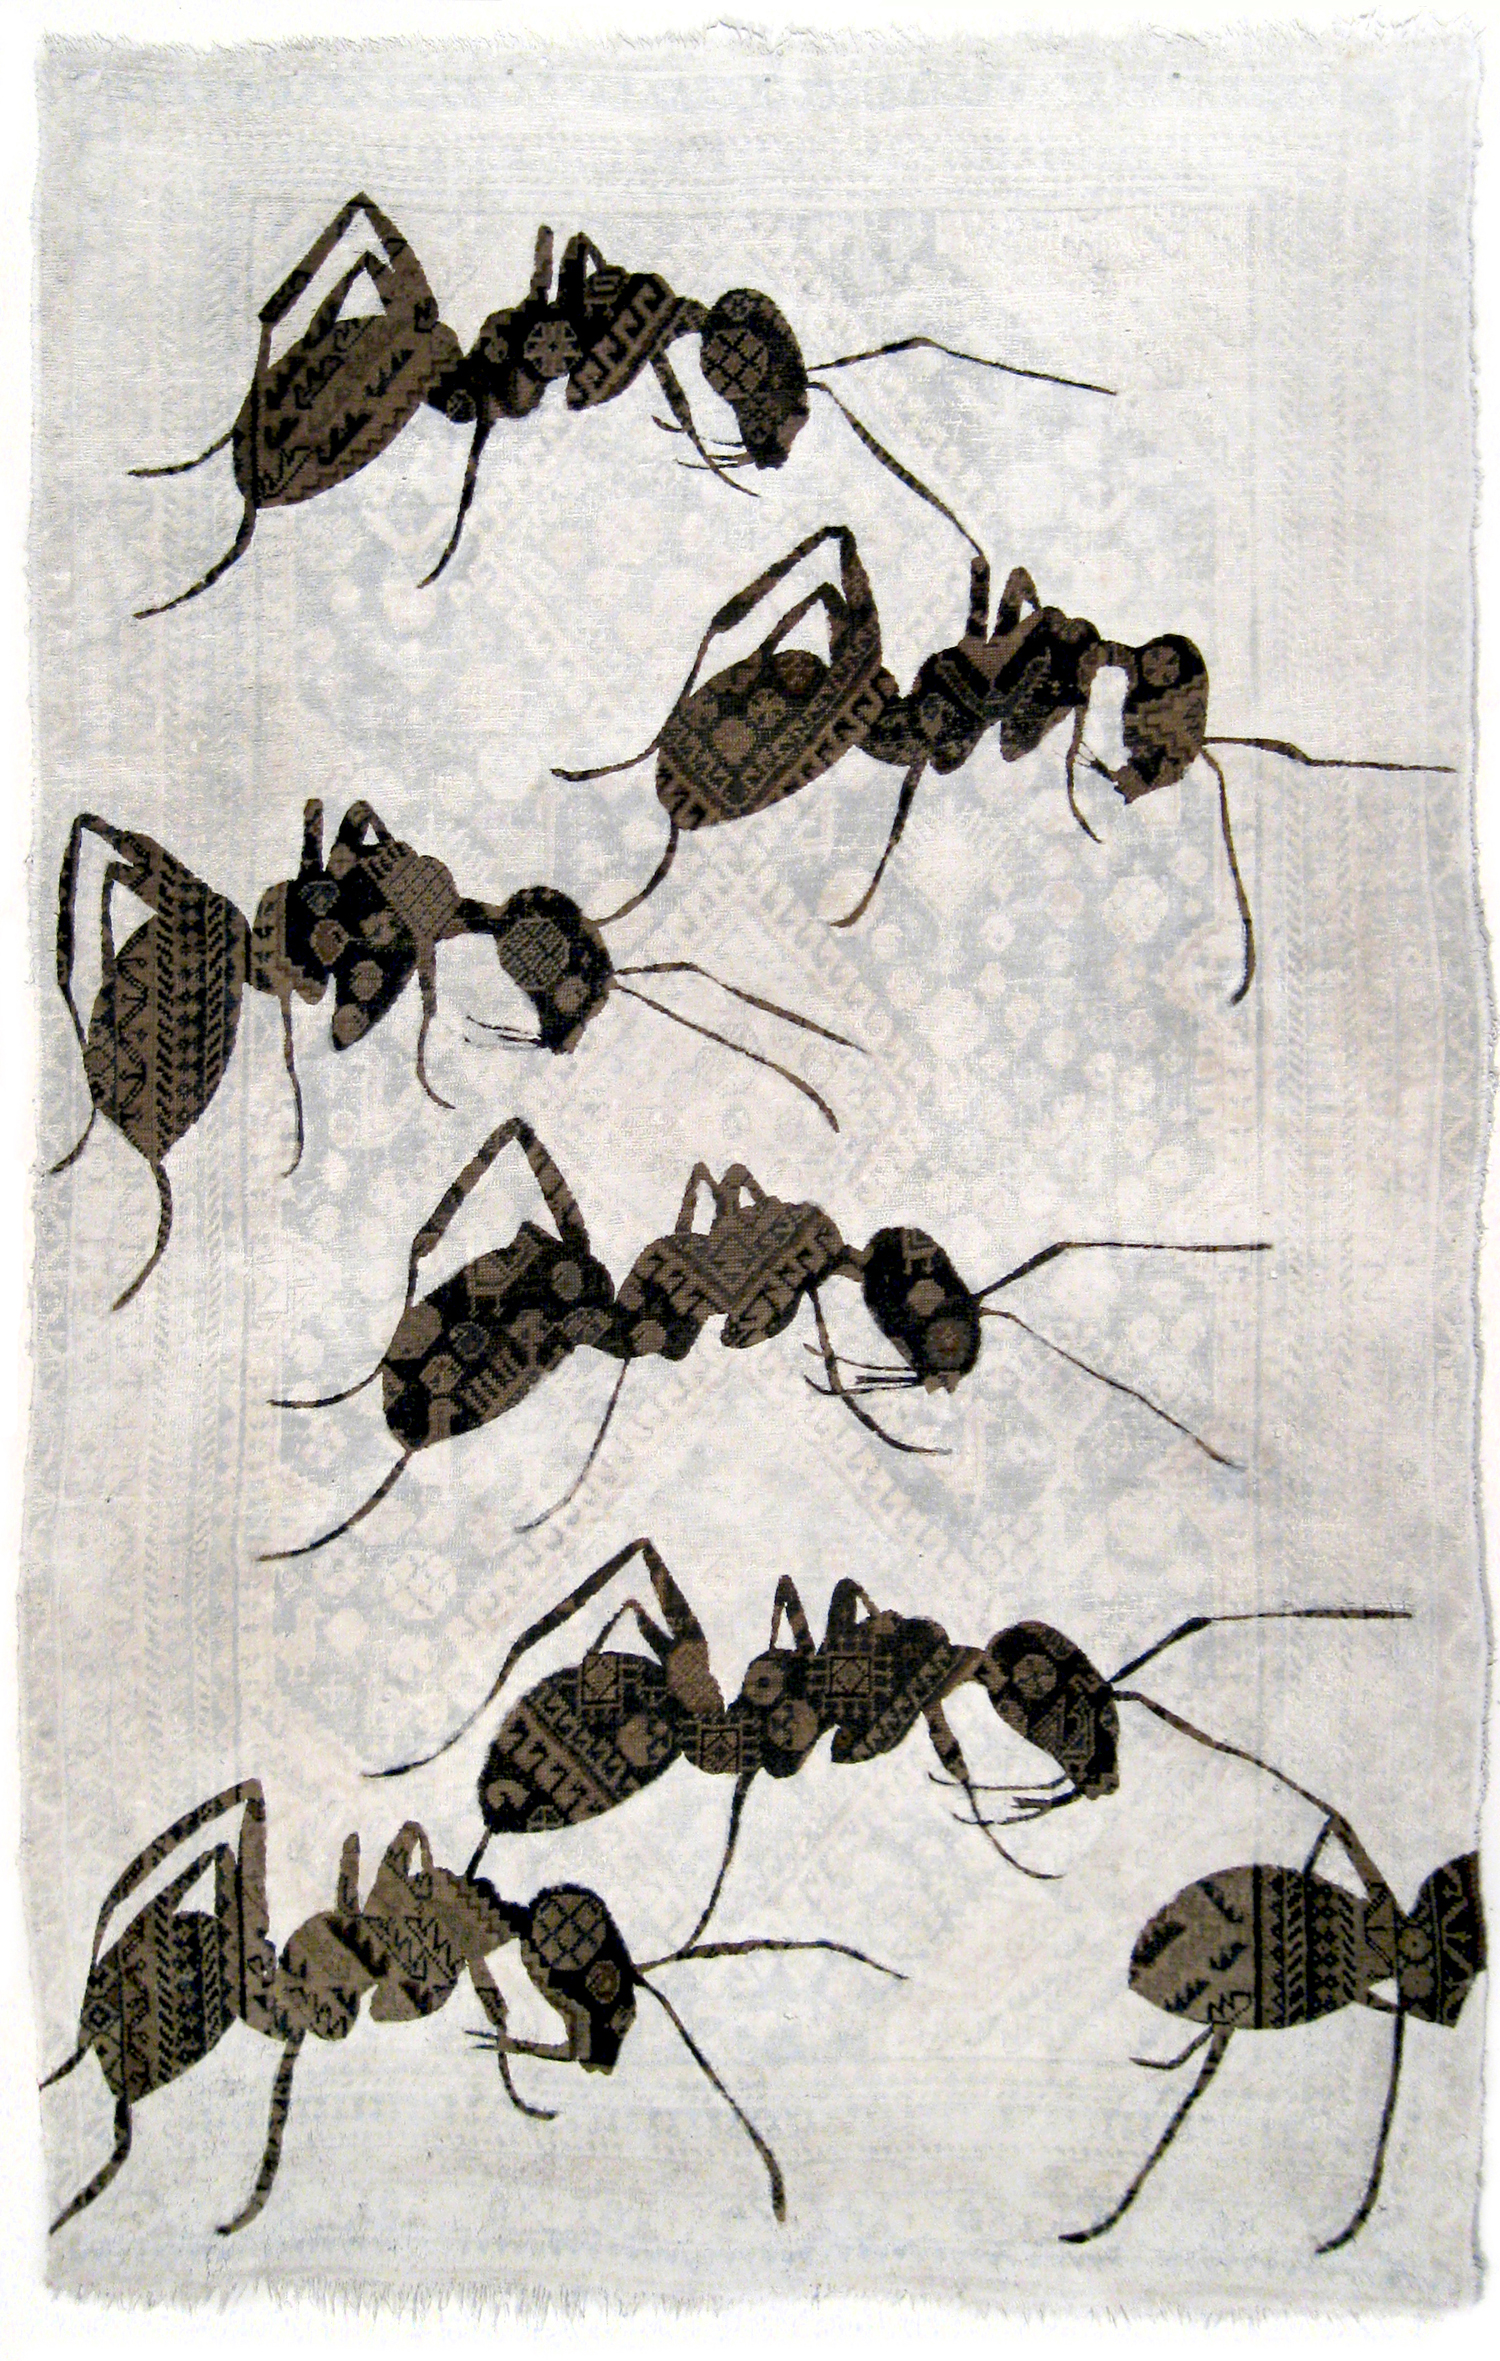 ANTS, by Noémi Kiss